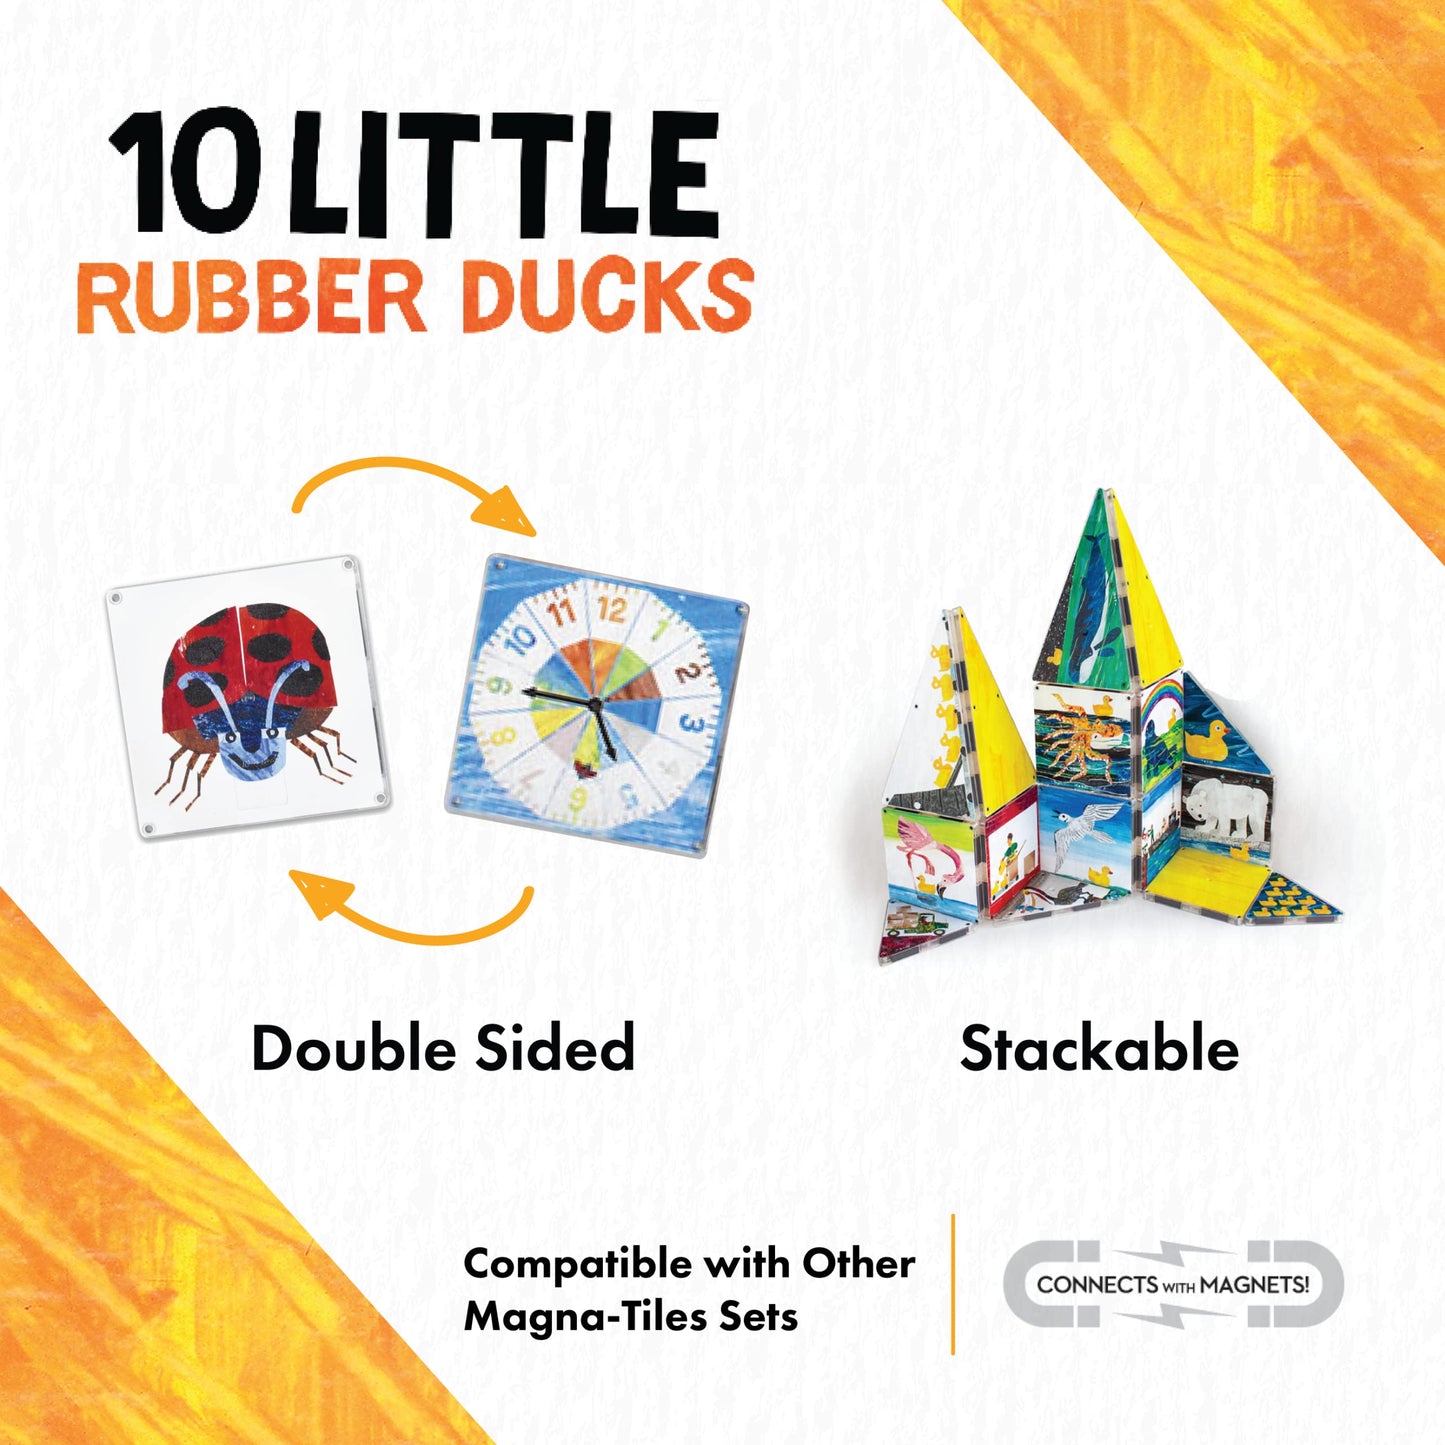 flitit Toys 10 Little Rubber Ducks